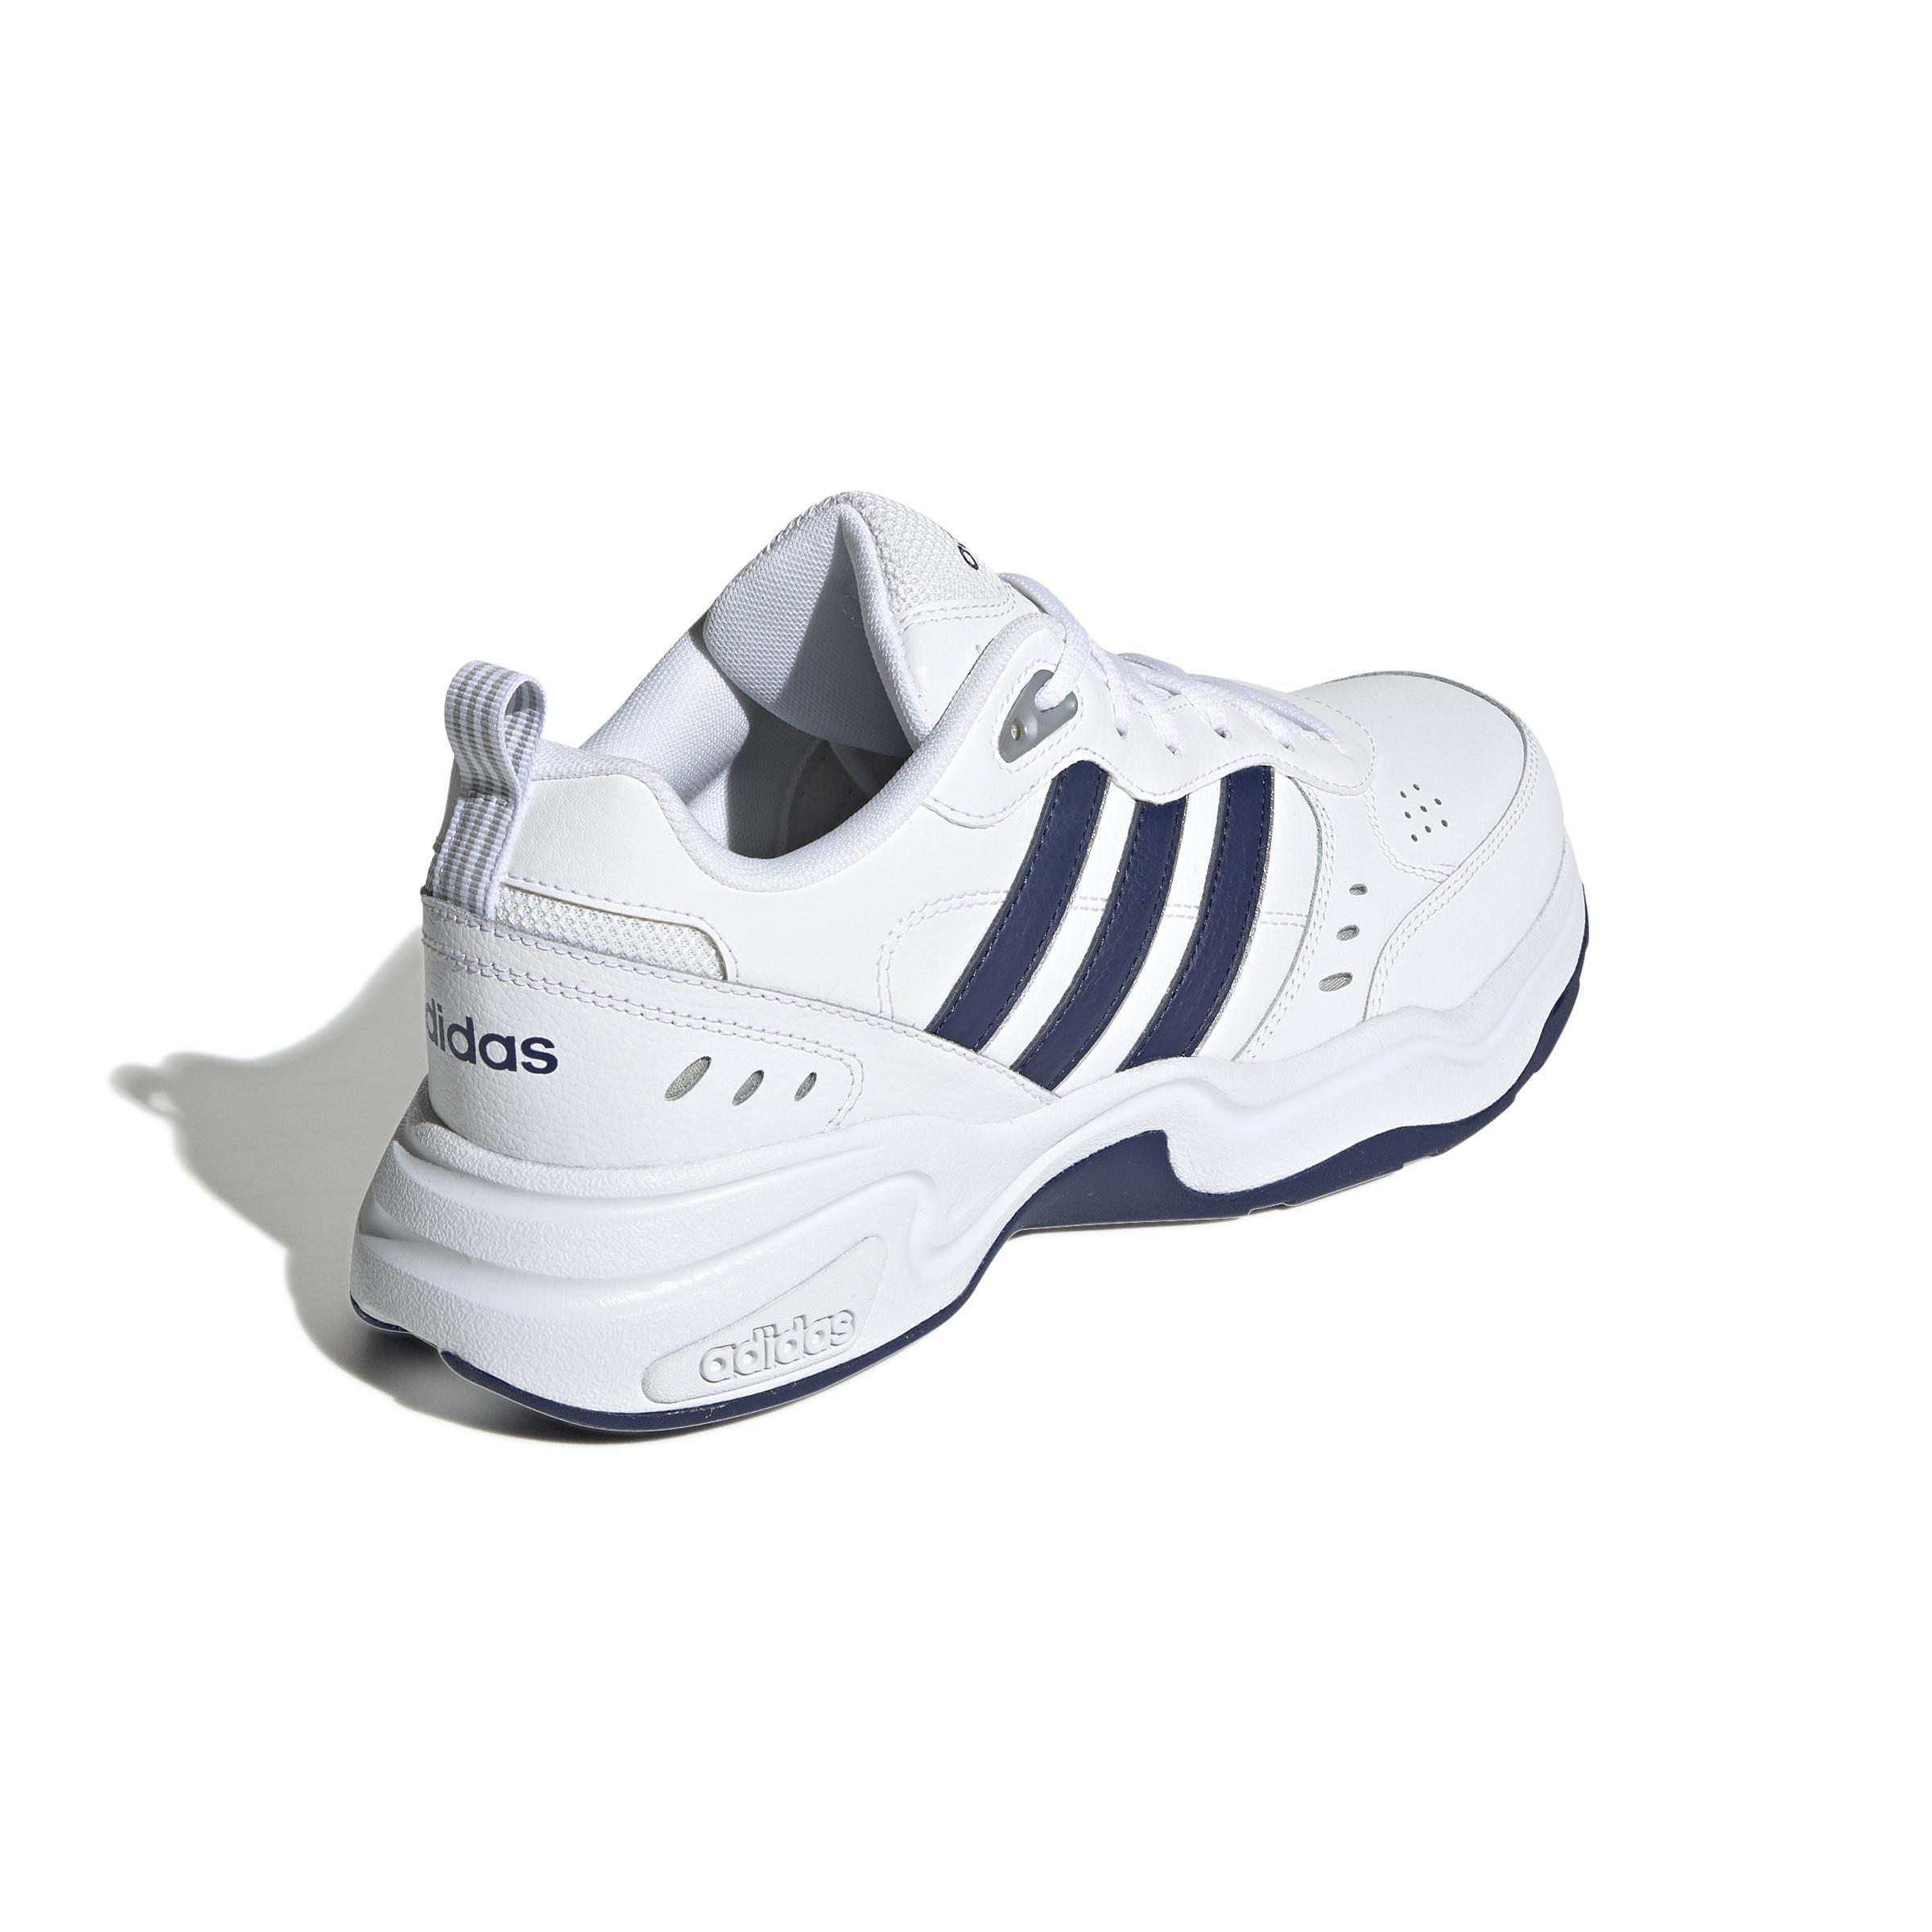 adidas - Men Strutter Shoes, White